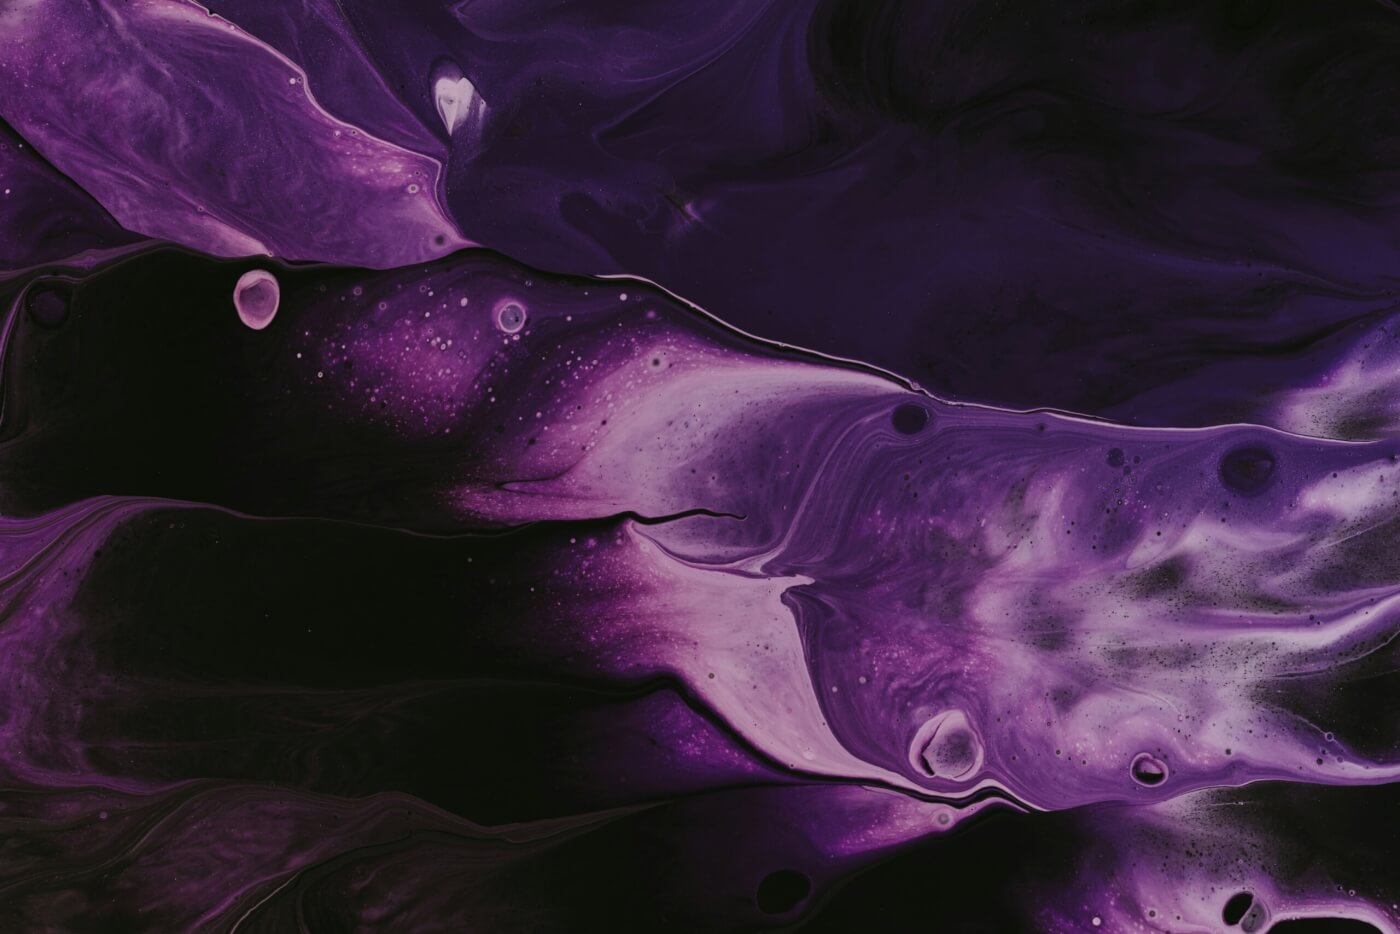 Purple texture background